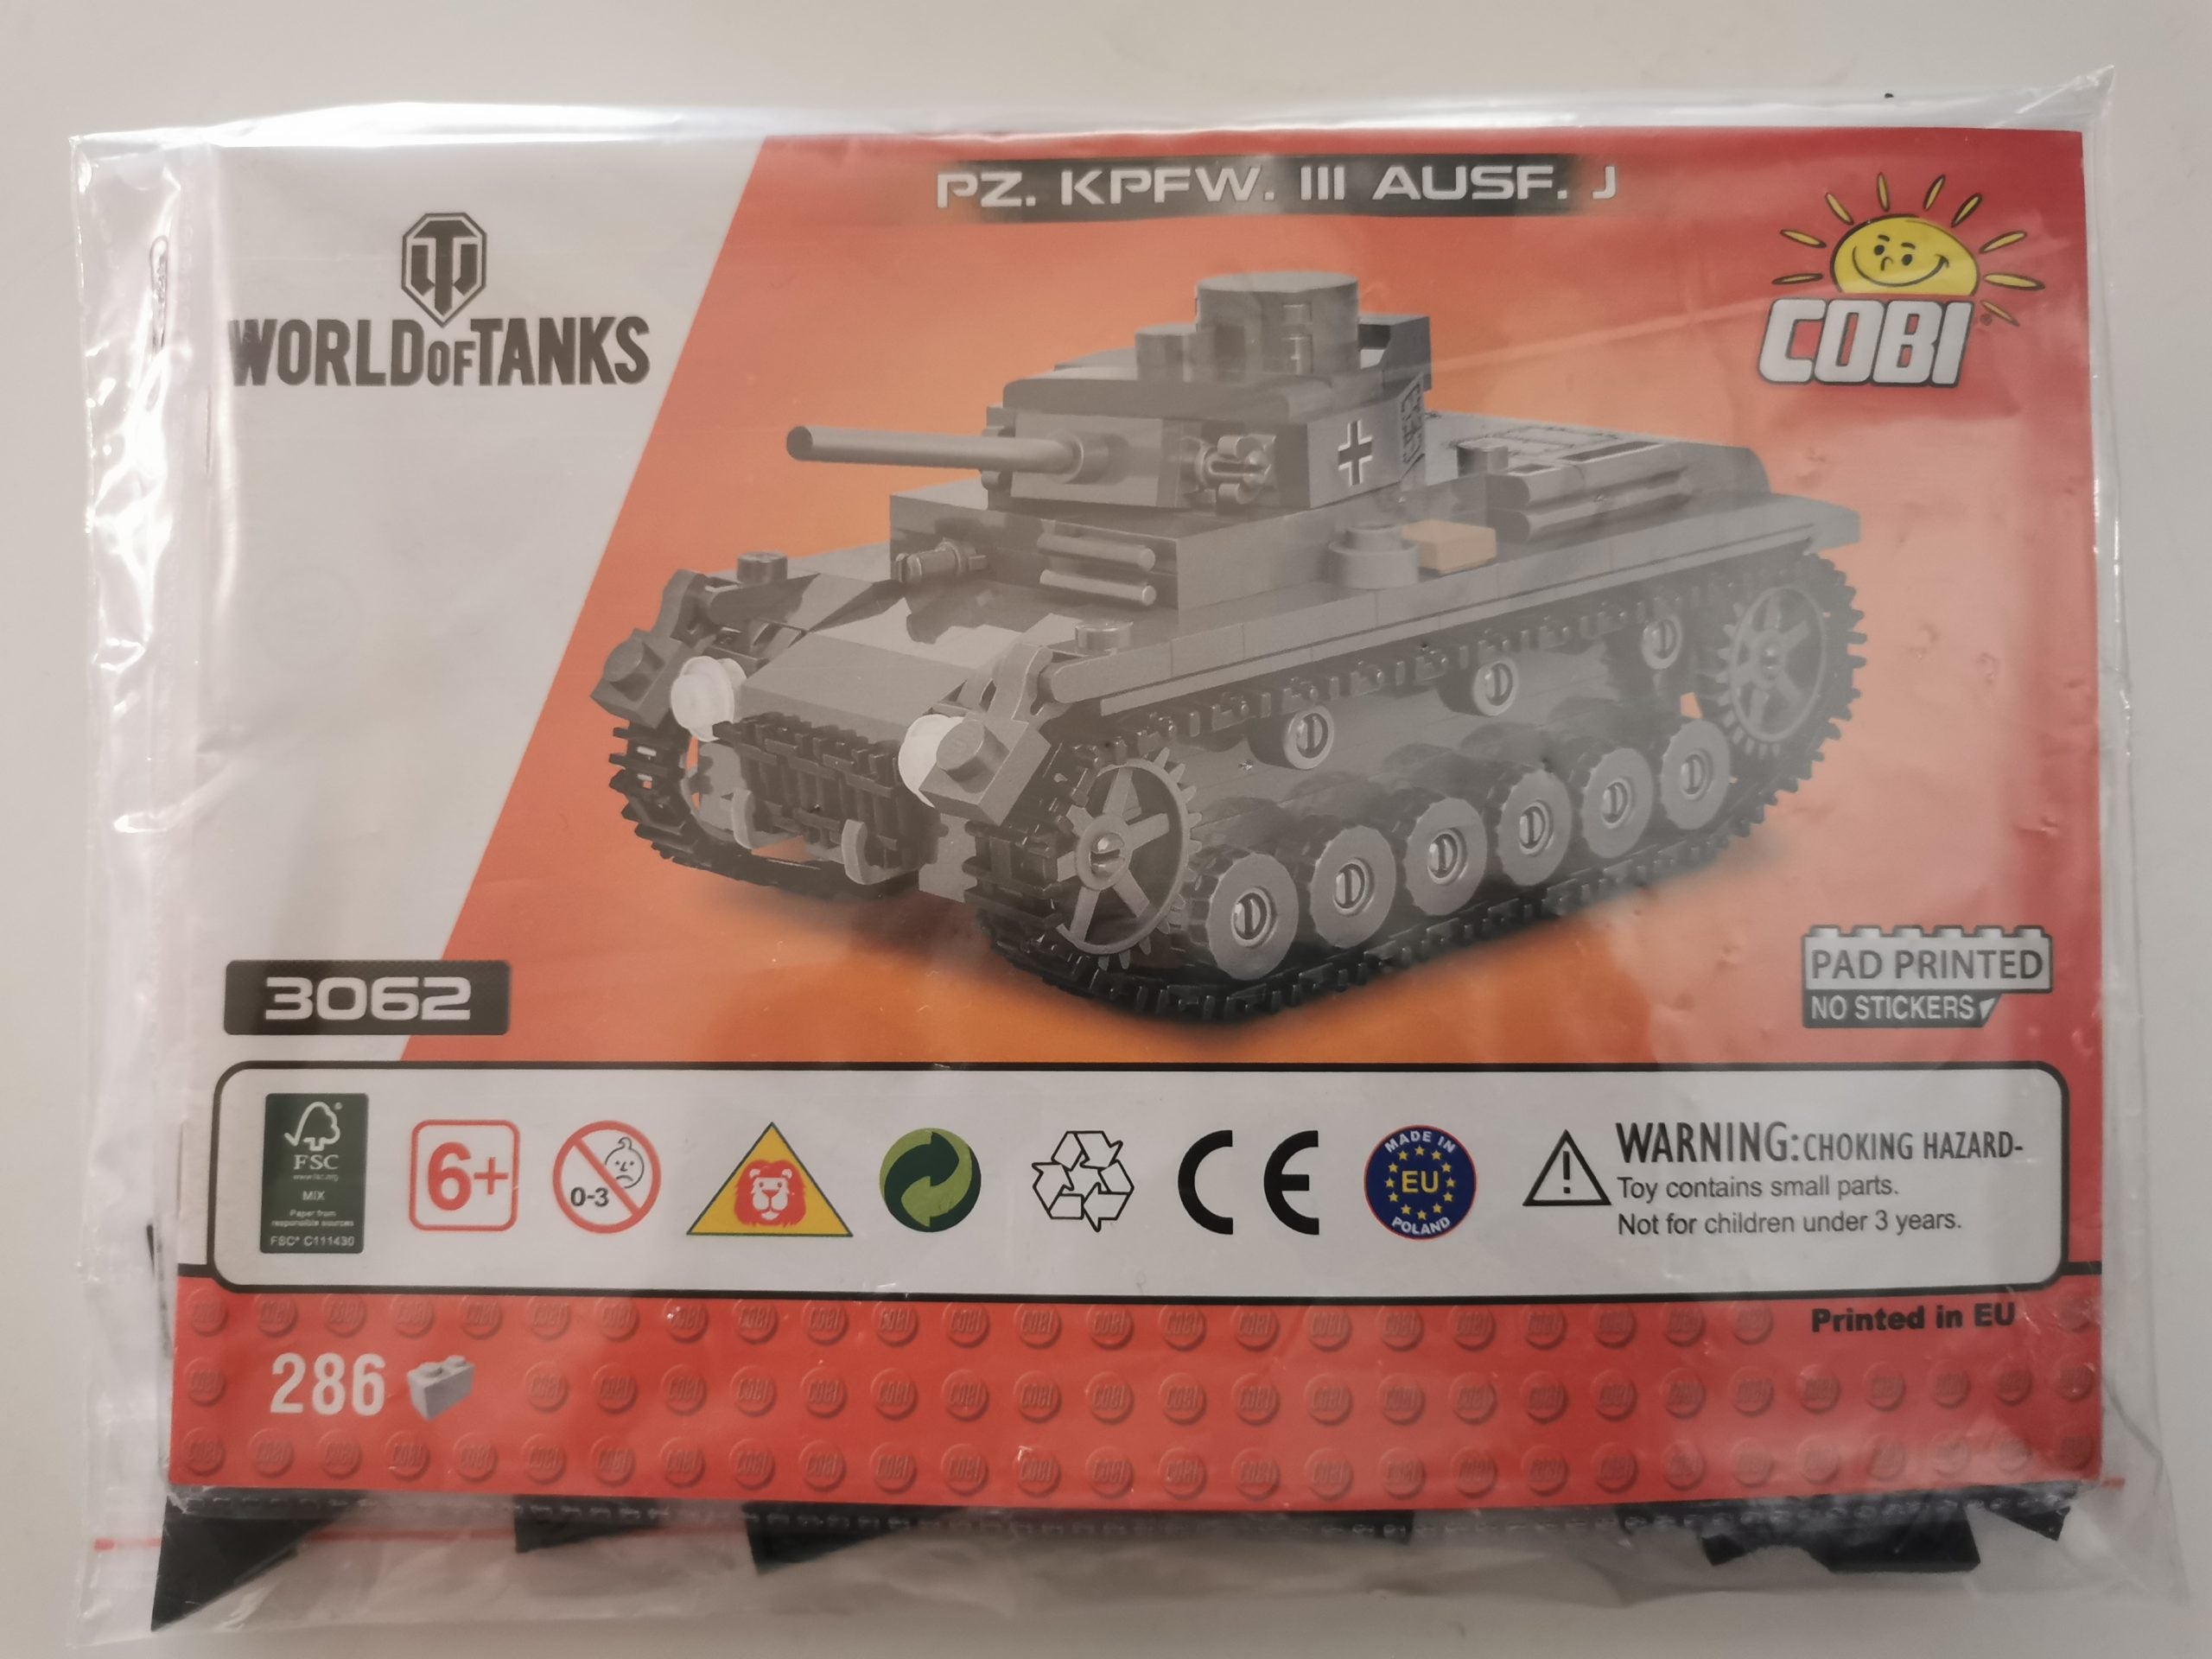 Cobi 3062 PZ. KPWF. III Ausf.J (1:48) (World of Tanks) usado